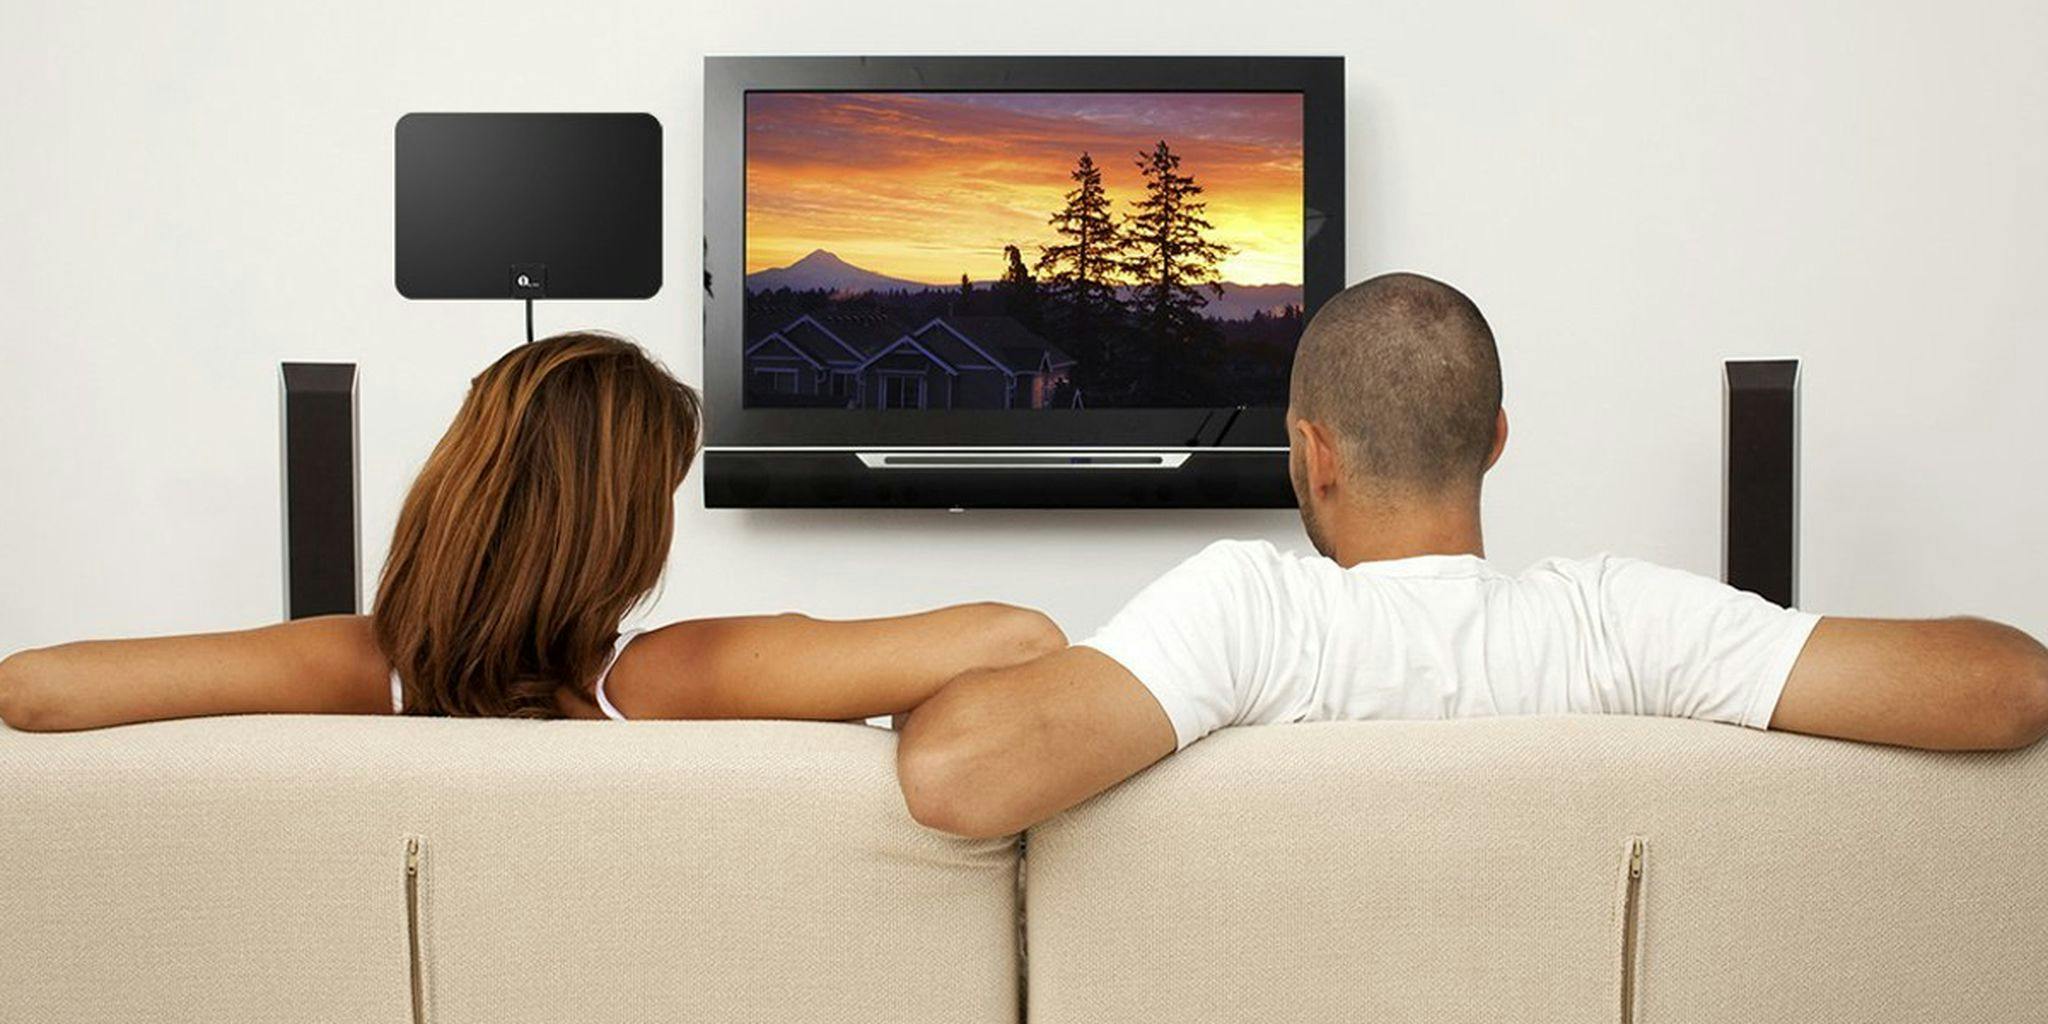 Включи телевизор клипы. Человек перед телевизором. Телевизор со спины. Человек сидит перед телевизором. Мебель перед телевизором.